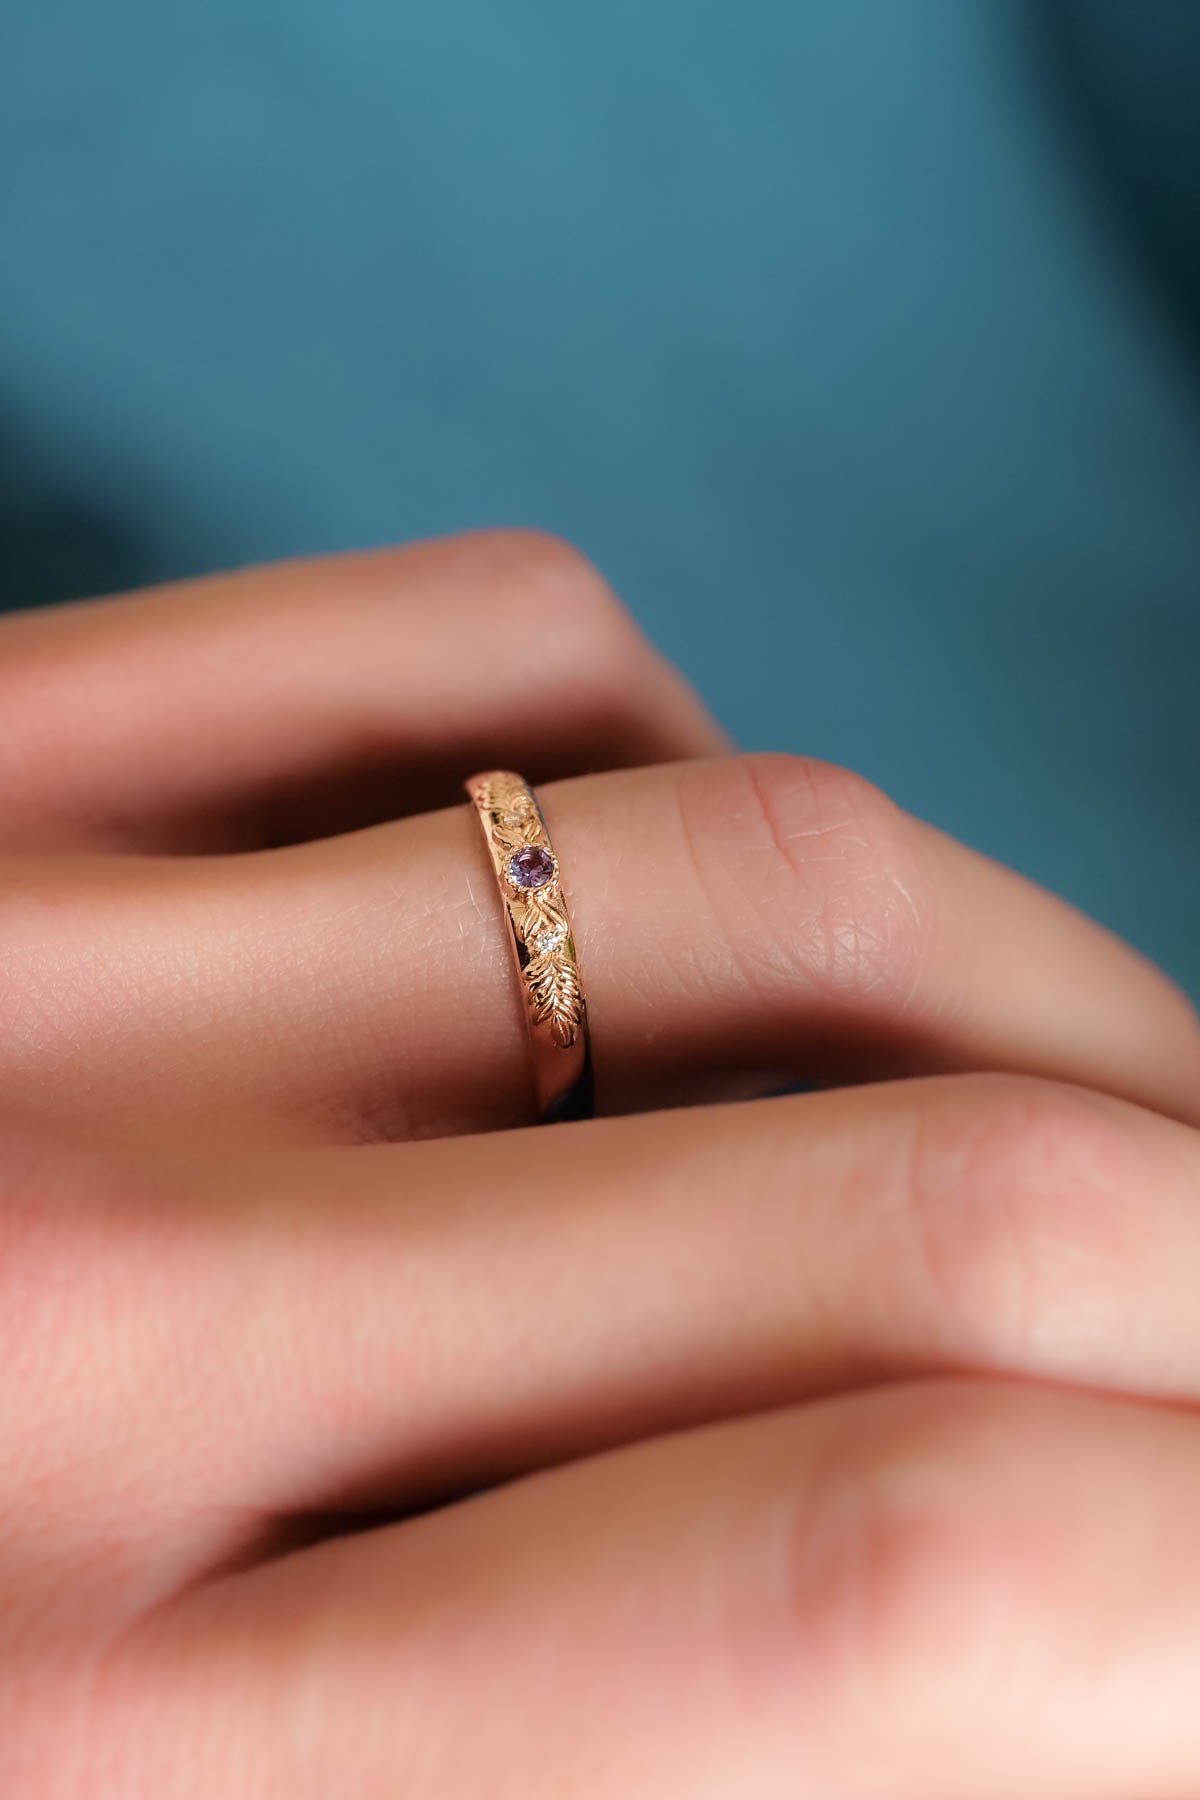 Rose gold alexandrite engagement ring